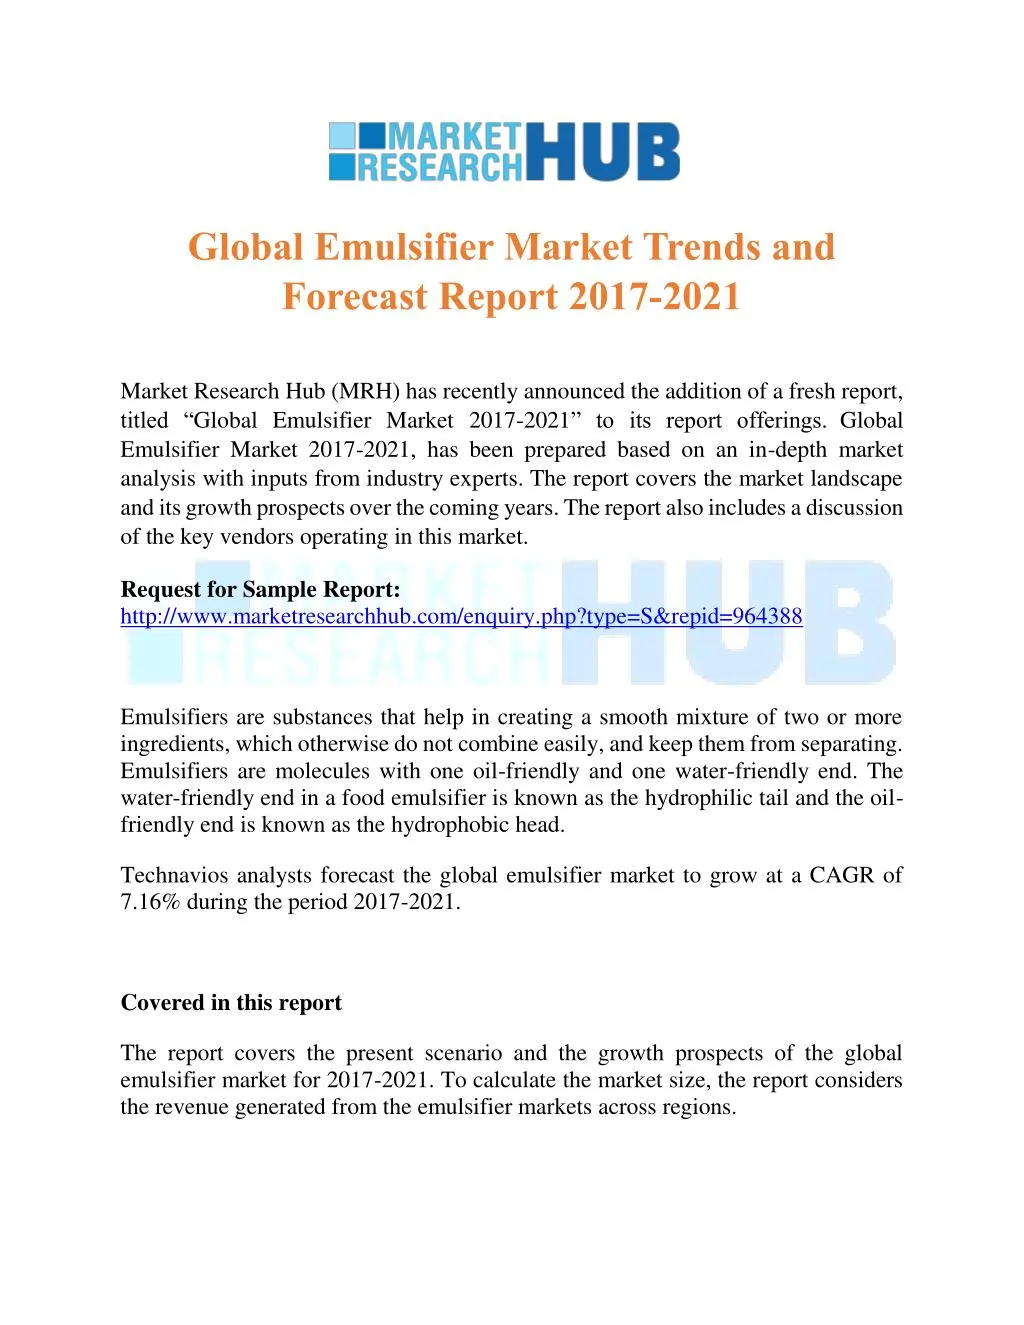 global emulsifier market trends and forecast